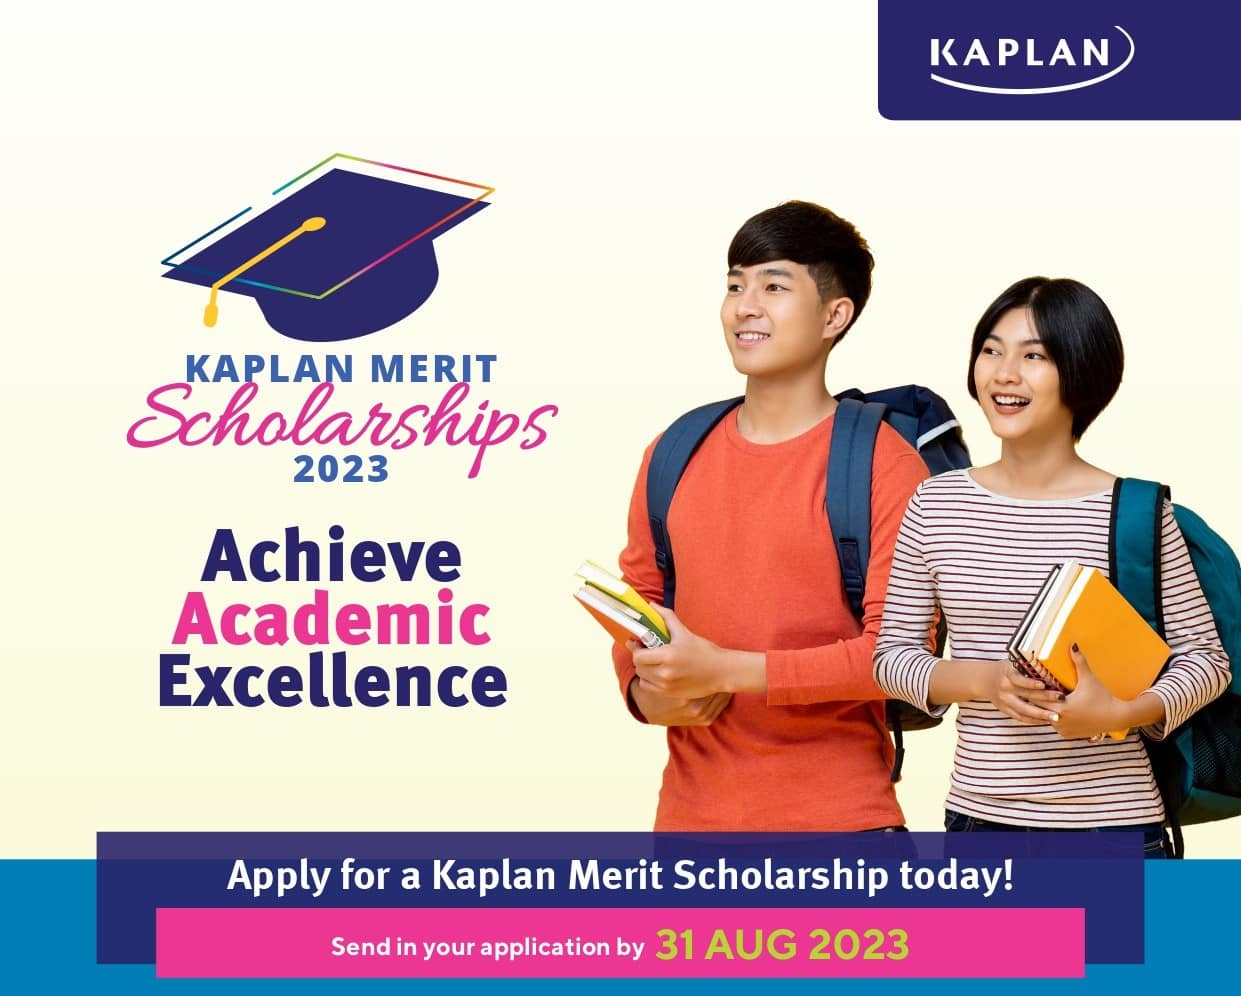 hoc bong kaplan singapore 2023 - Khóa cao đẳng (Diploma) của Kaplan Singapore